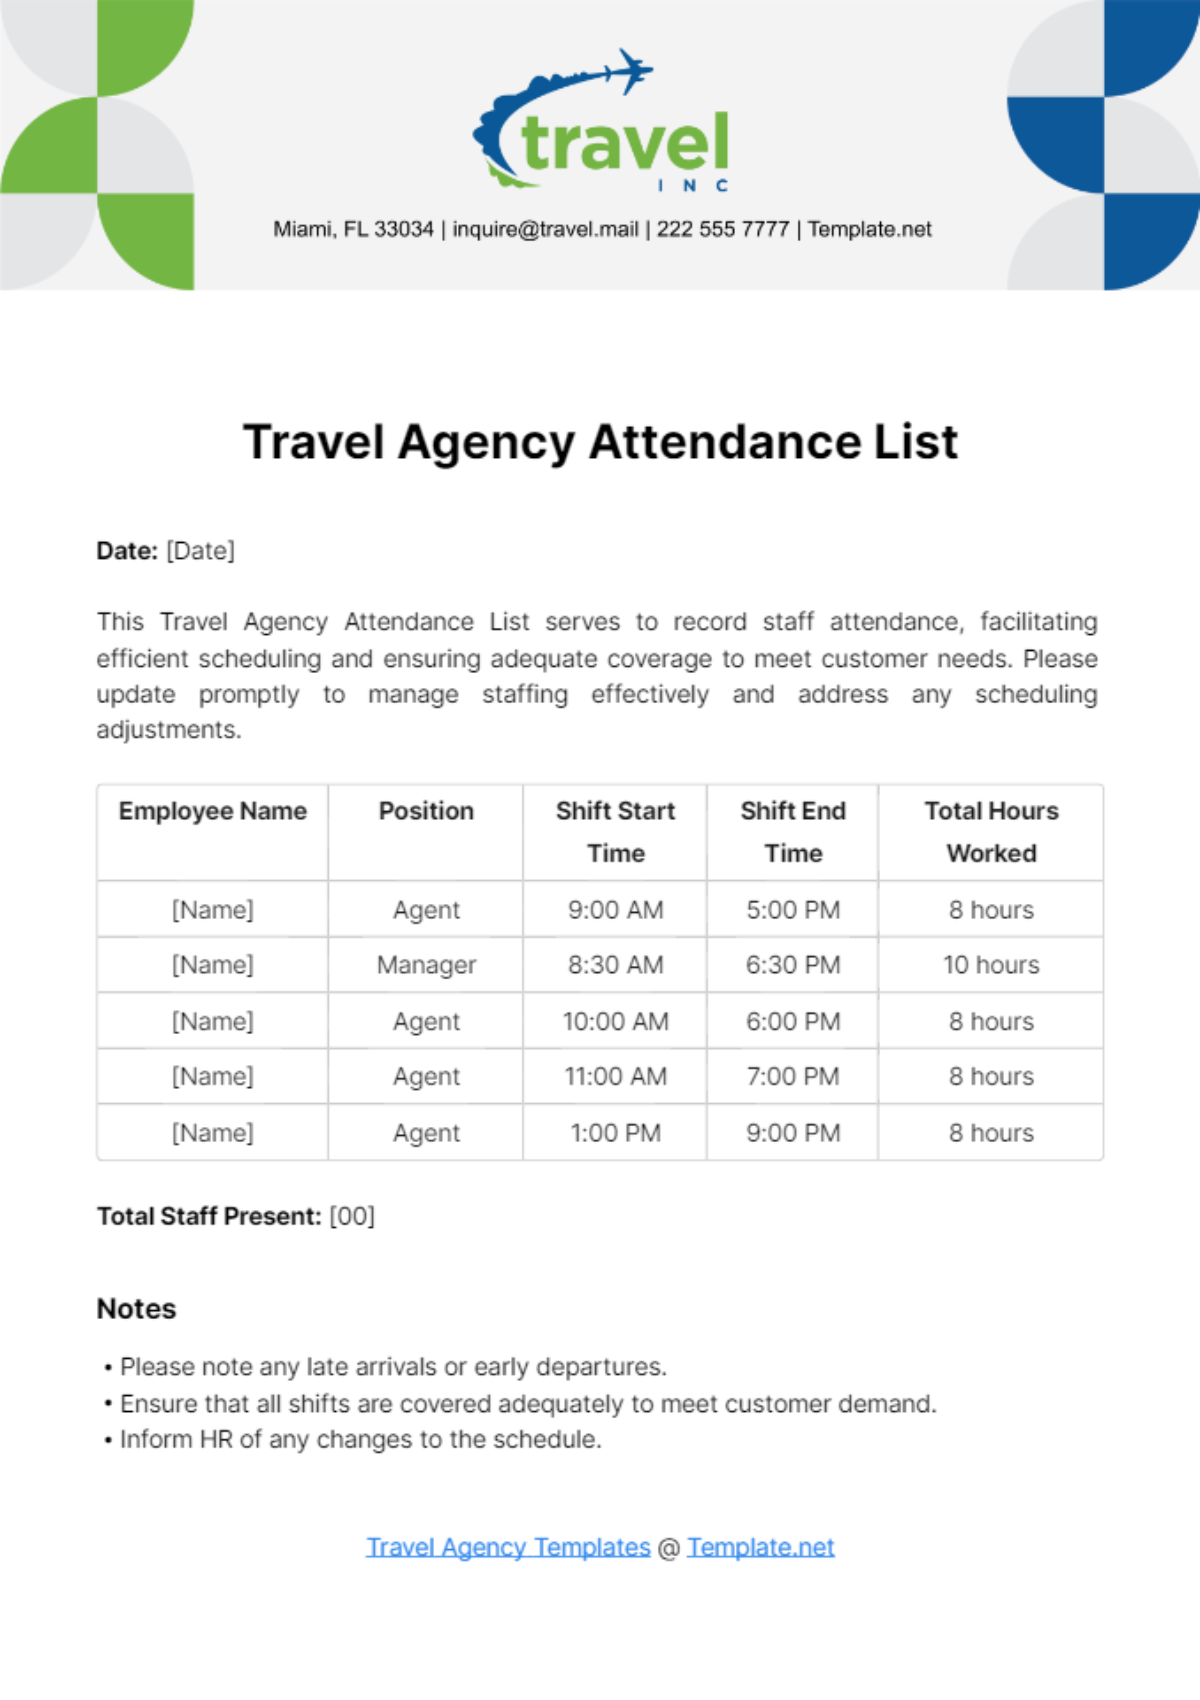 Travel Agency Attendance List Template